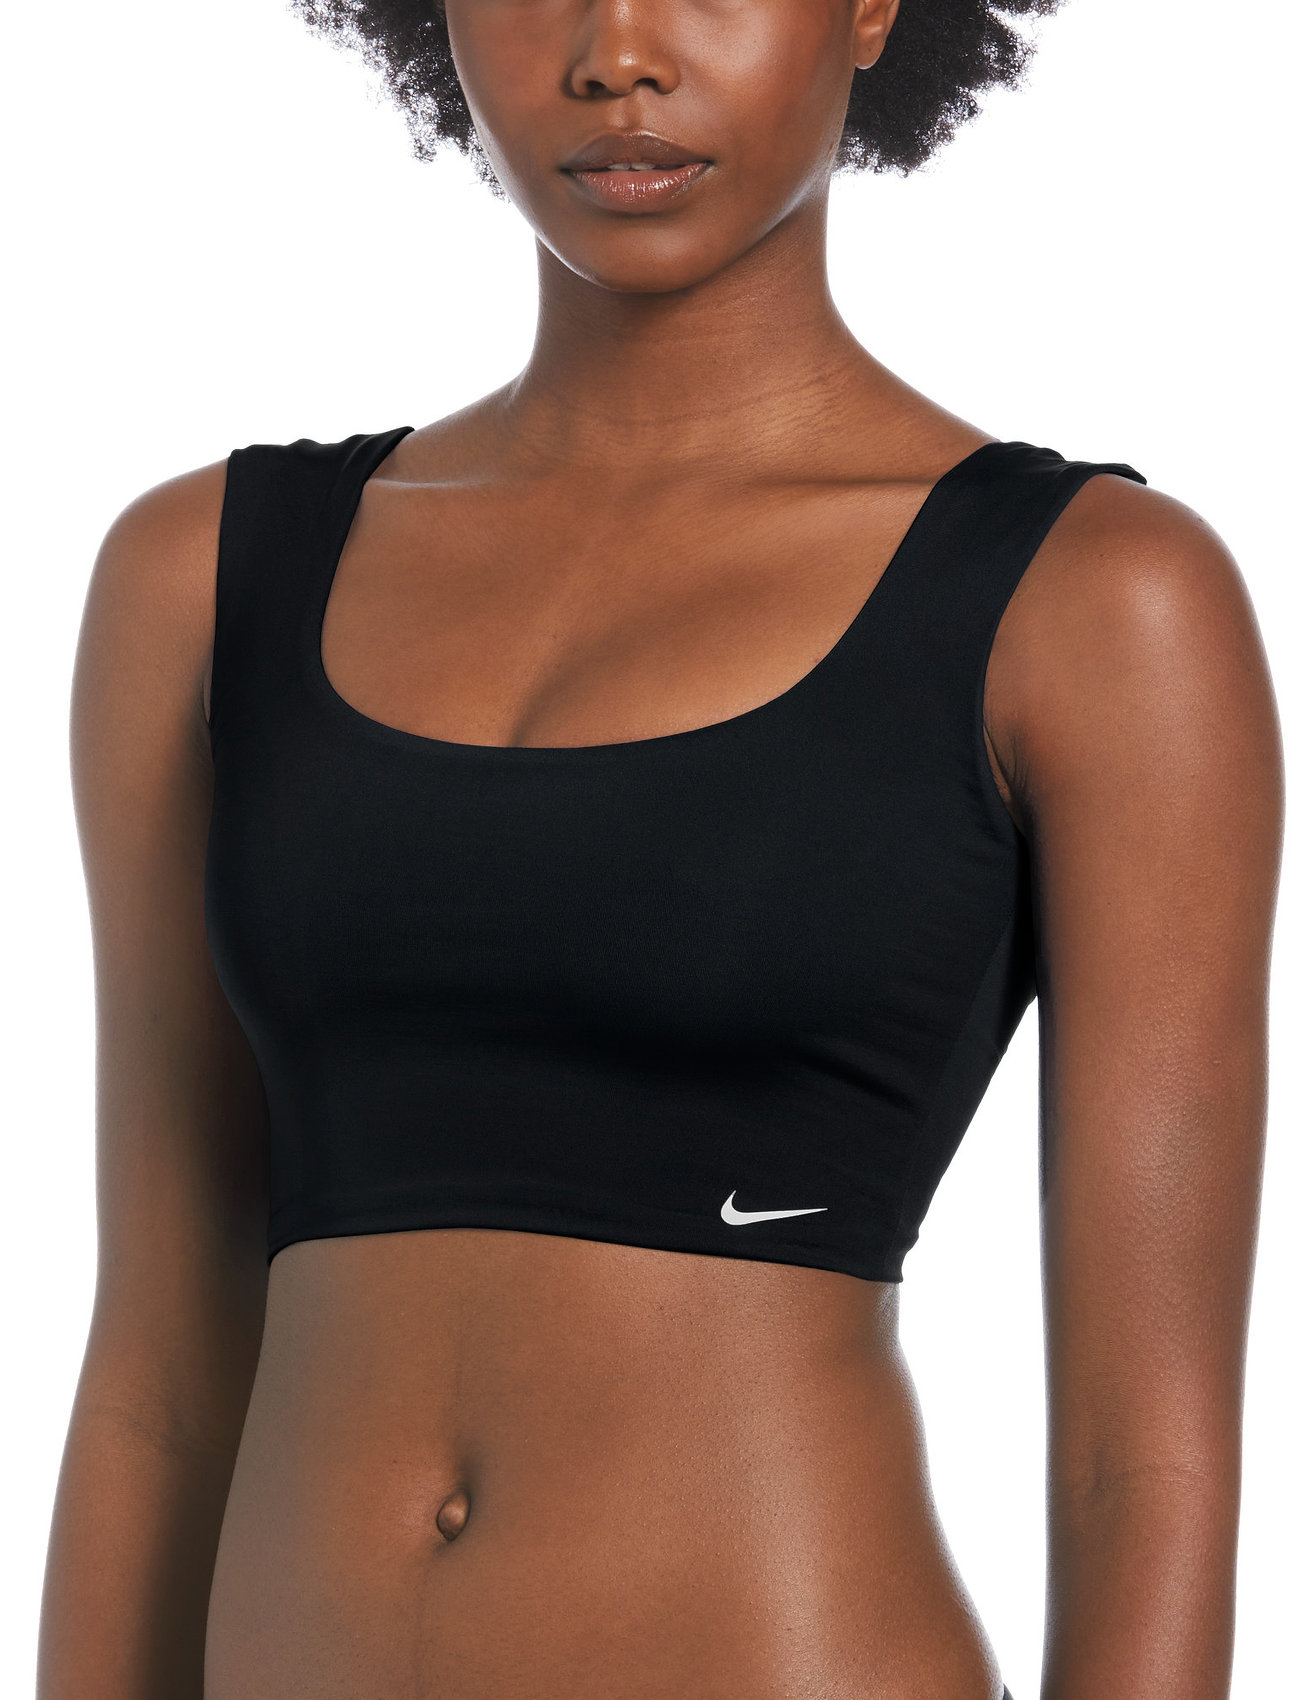 Frotar Inolvidable reserva NIKE SWIM Nike W Crop Top Essential - Bikini tops | Boozt.com